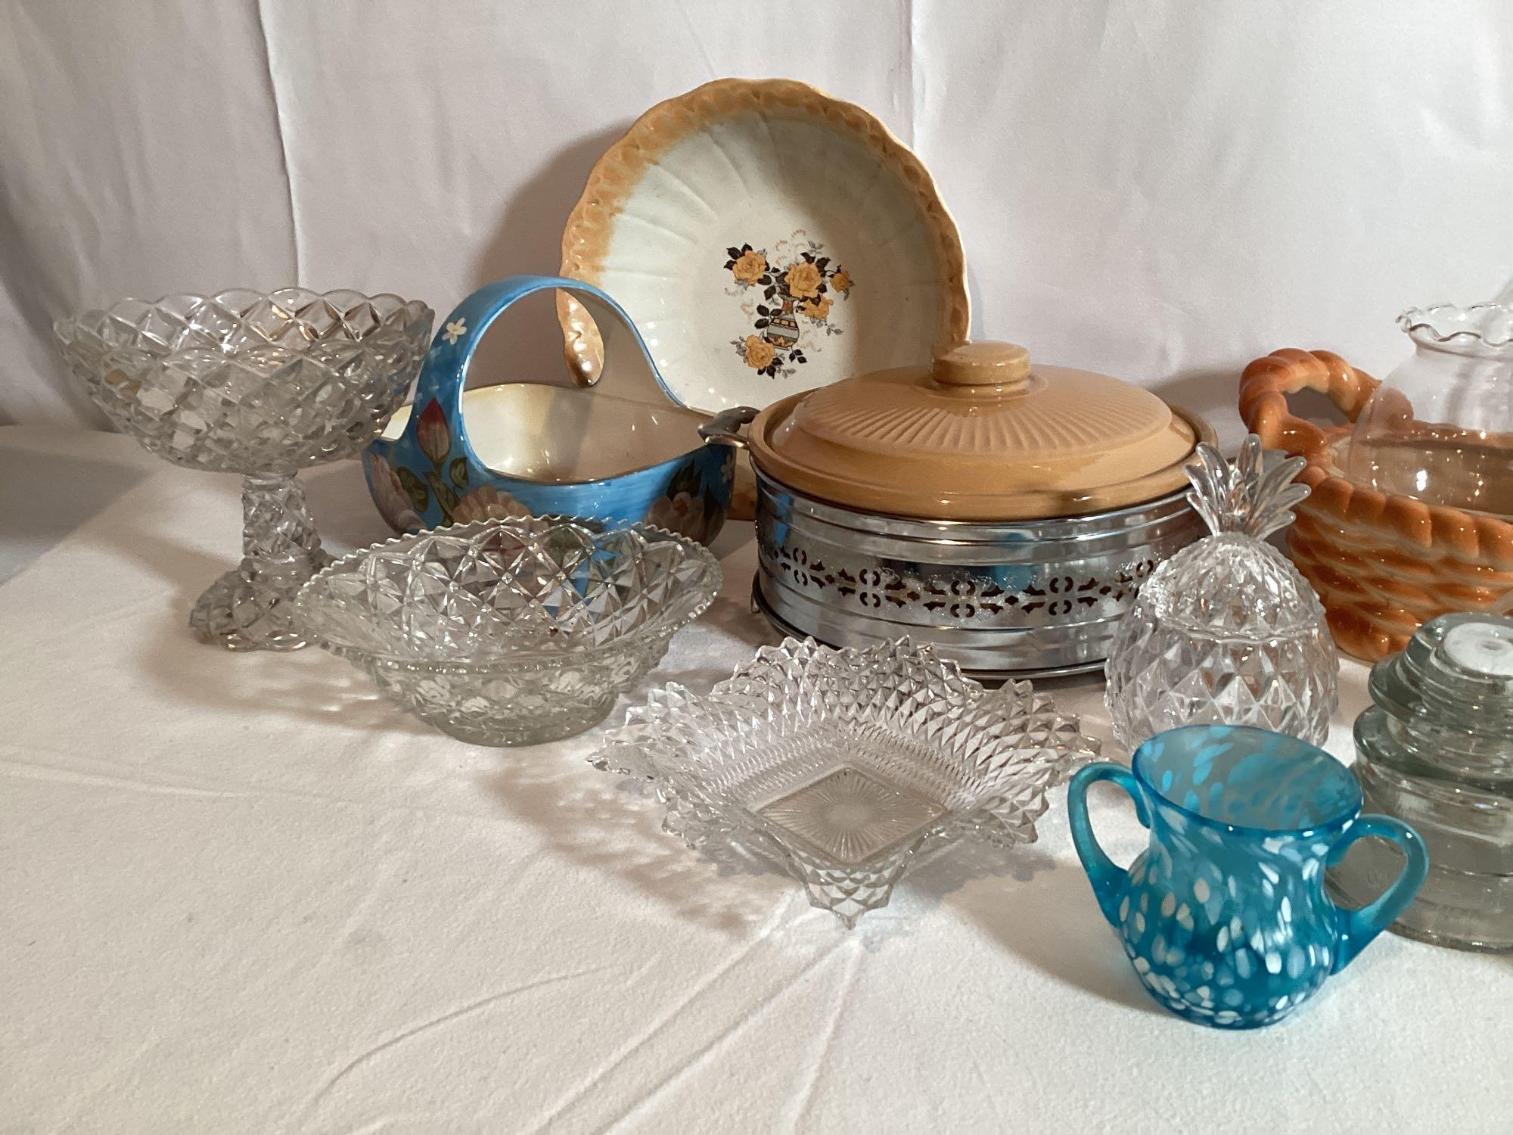 Image for Ceramics and Glassware